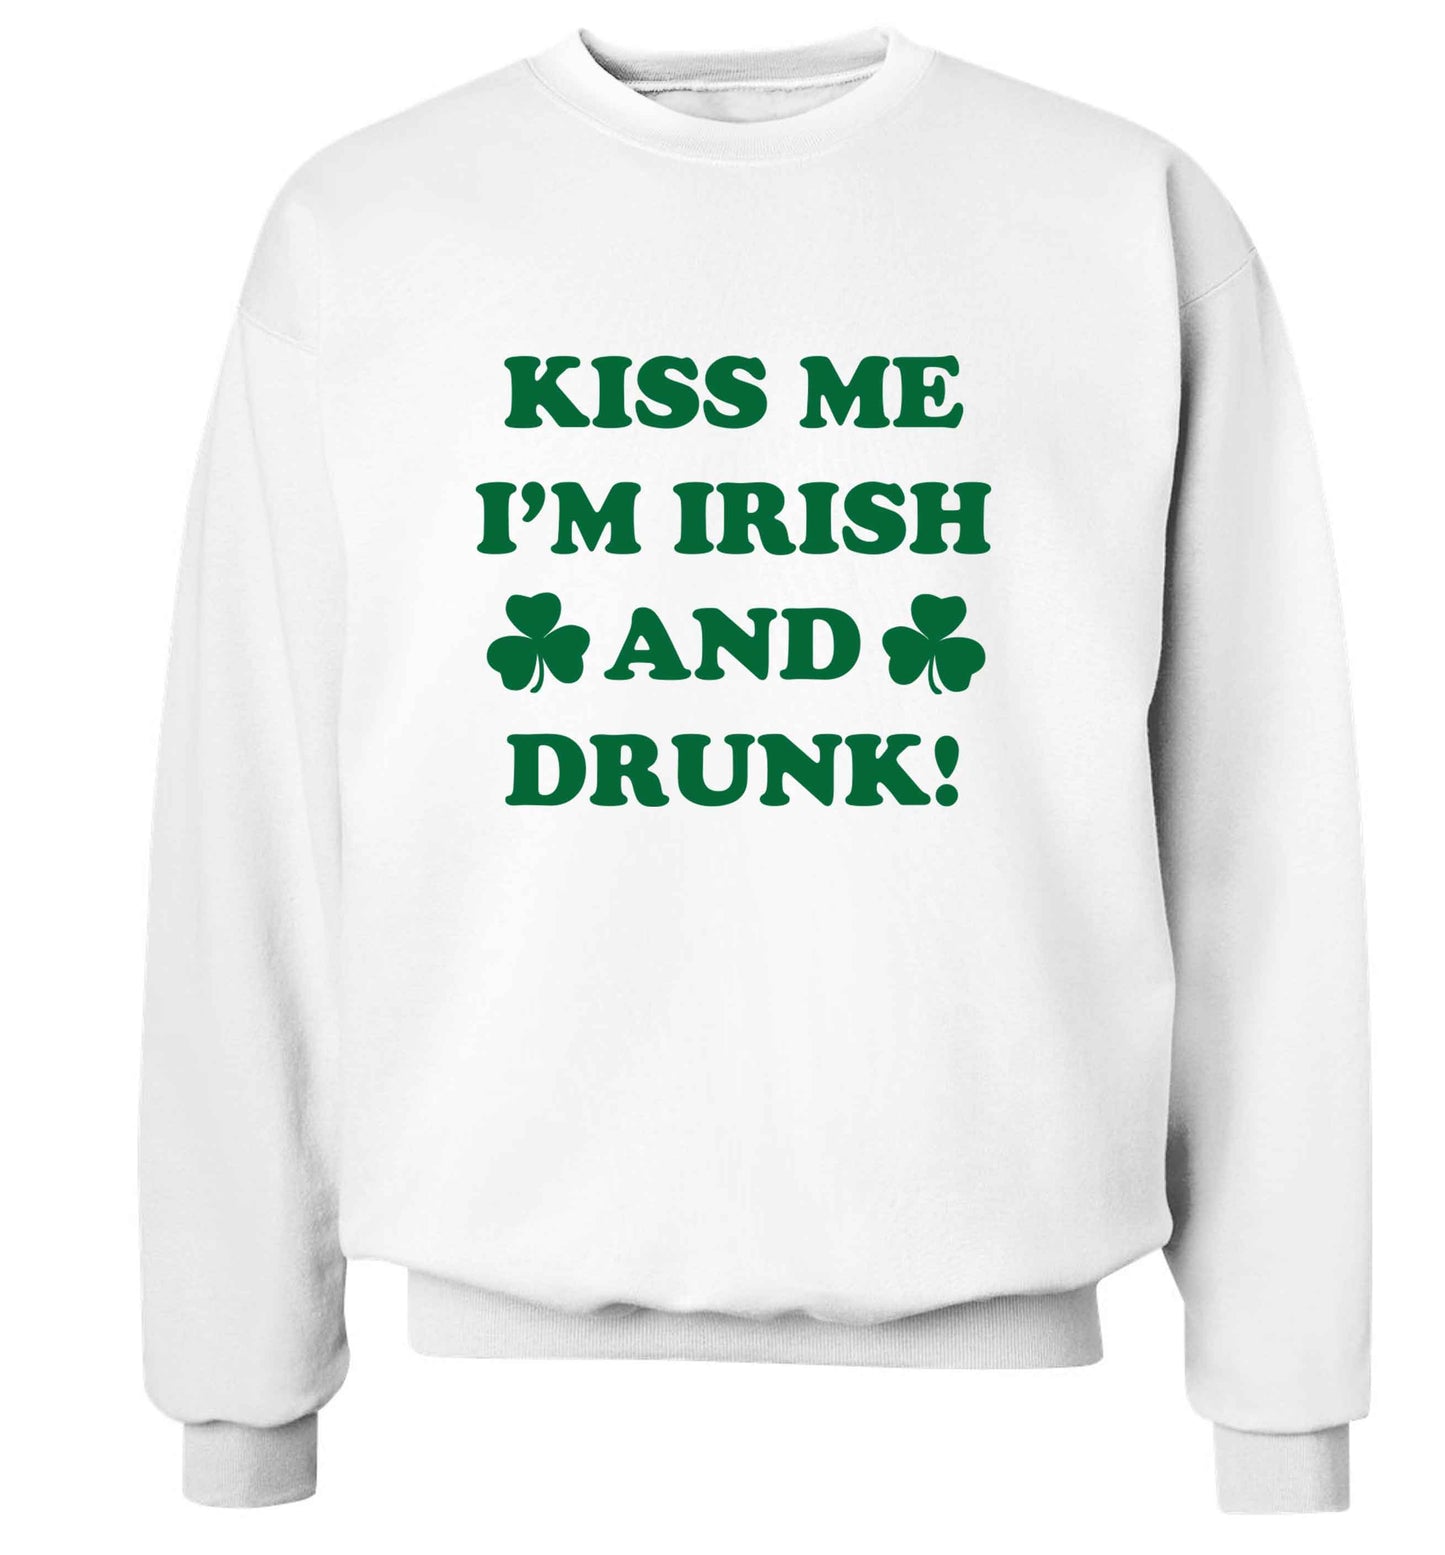 Kiss me I'm Irish and drunk adult's unisex white sweater 2XL